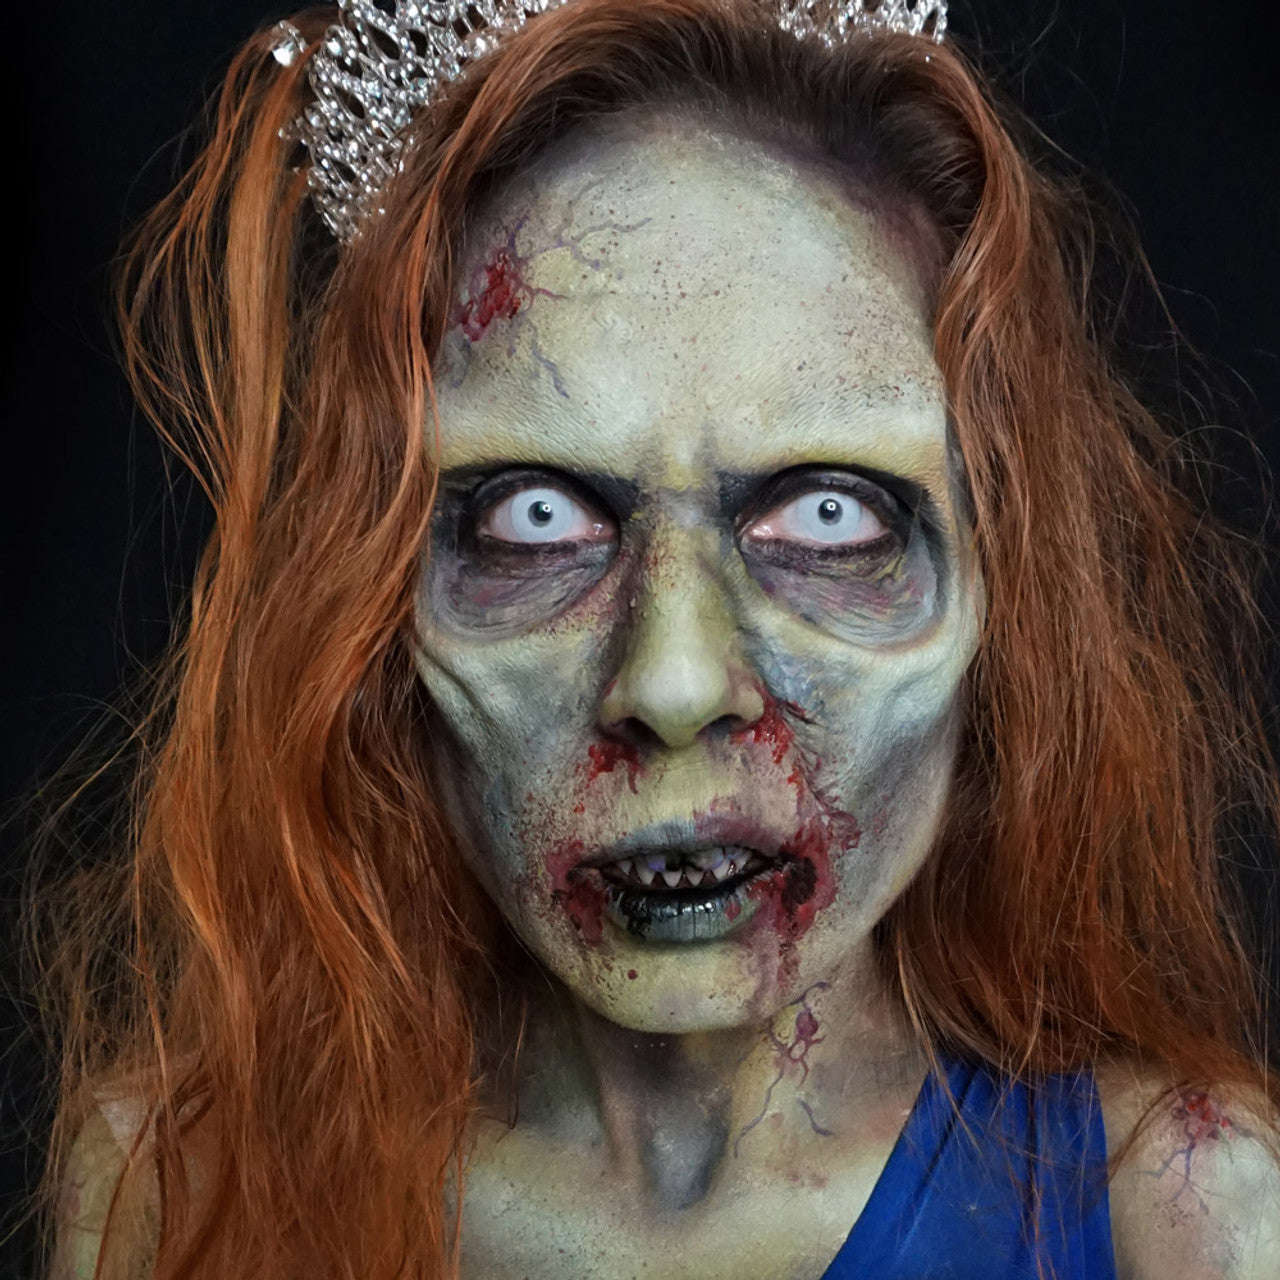 Mehron Complete Zombie Character Makeup Kit